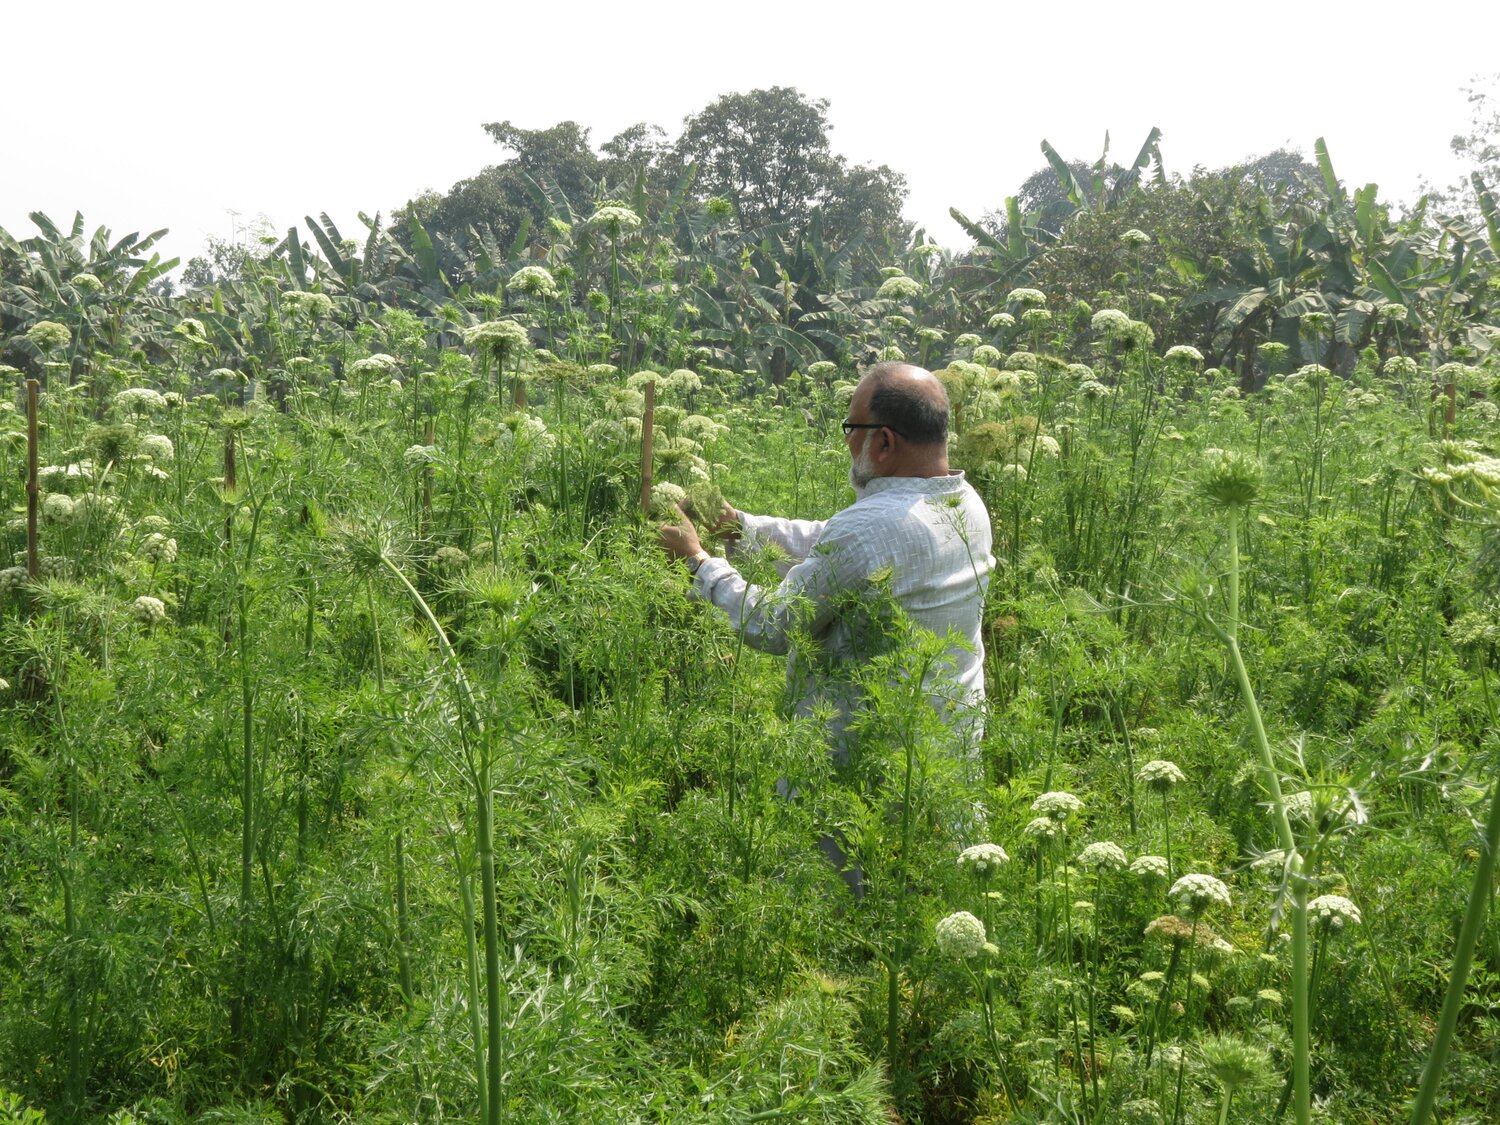 Professor Rahim in a field of wild carrots